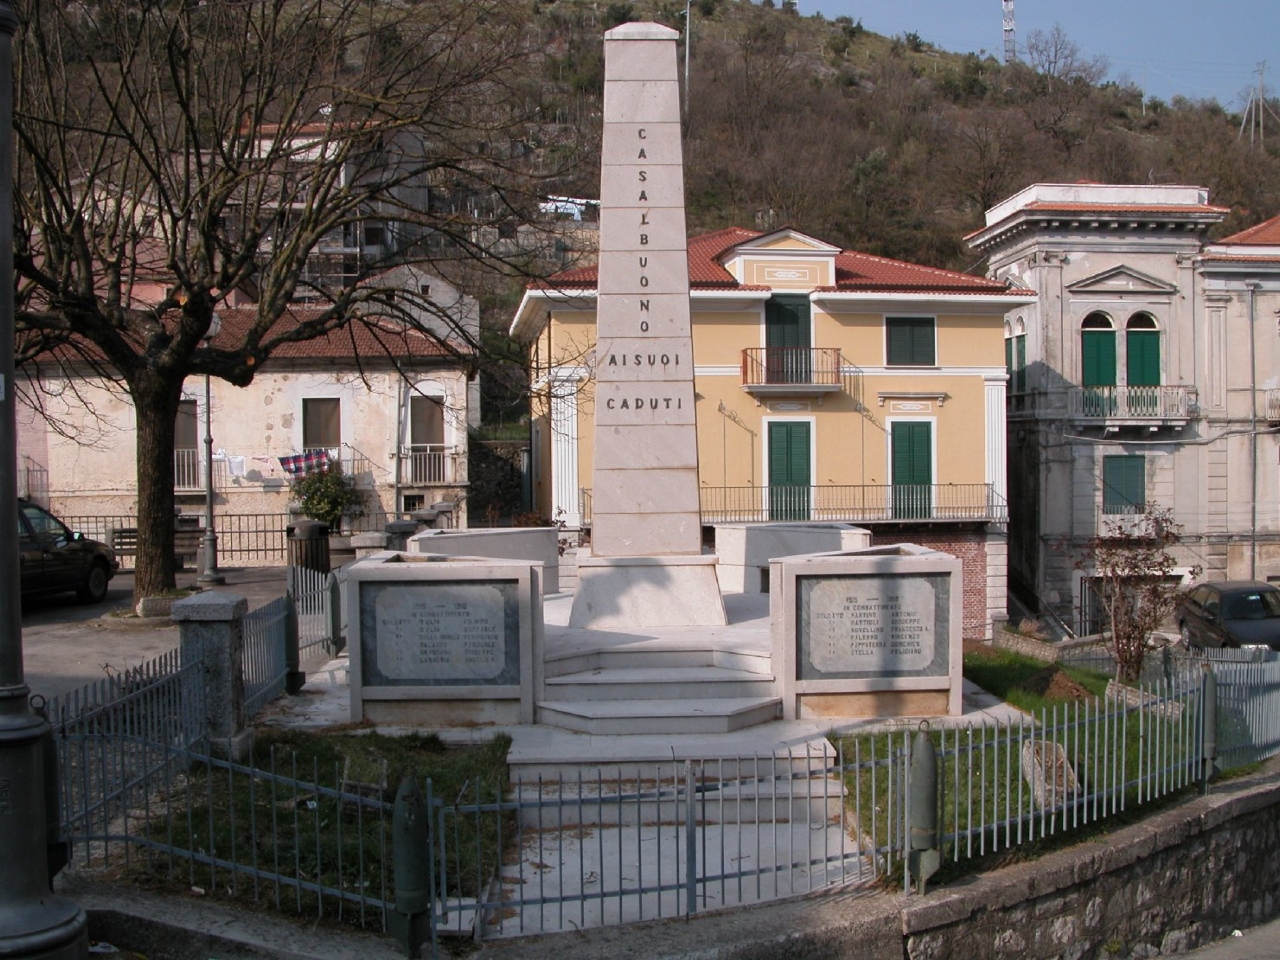 monumento ai caduti - a obelisco - bottega Italia centro-meridionale (sec. XX)